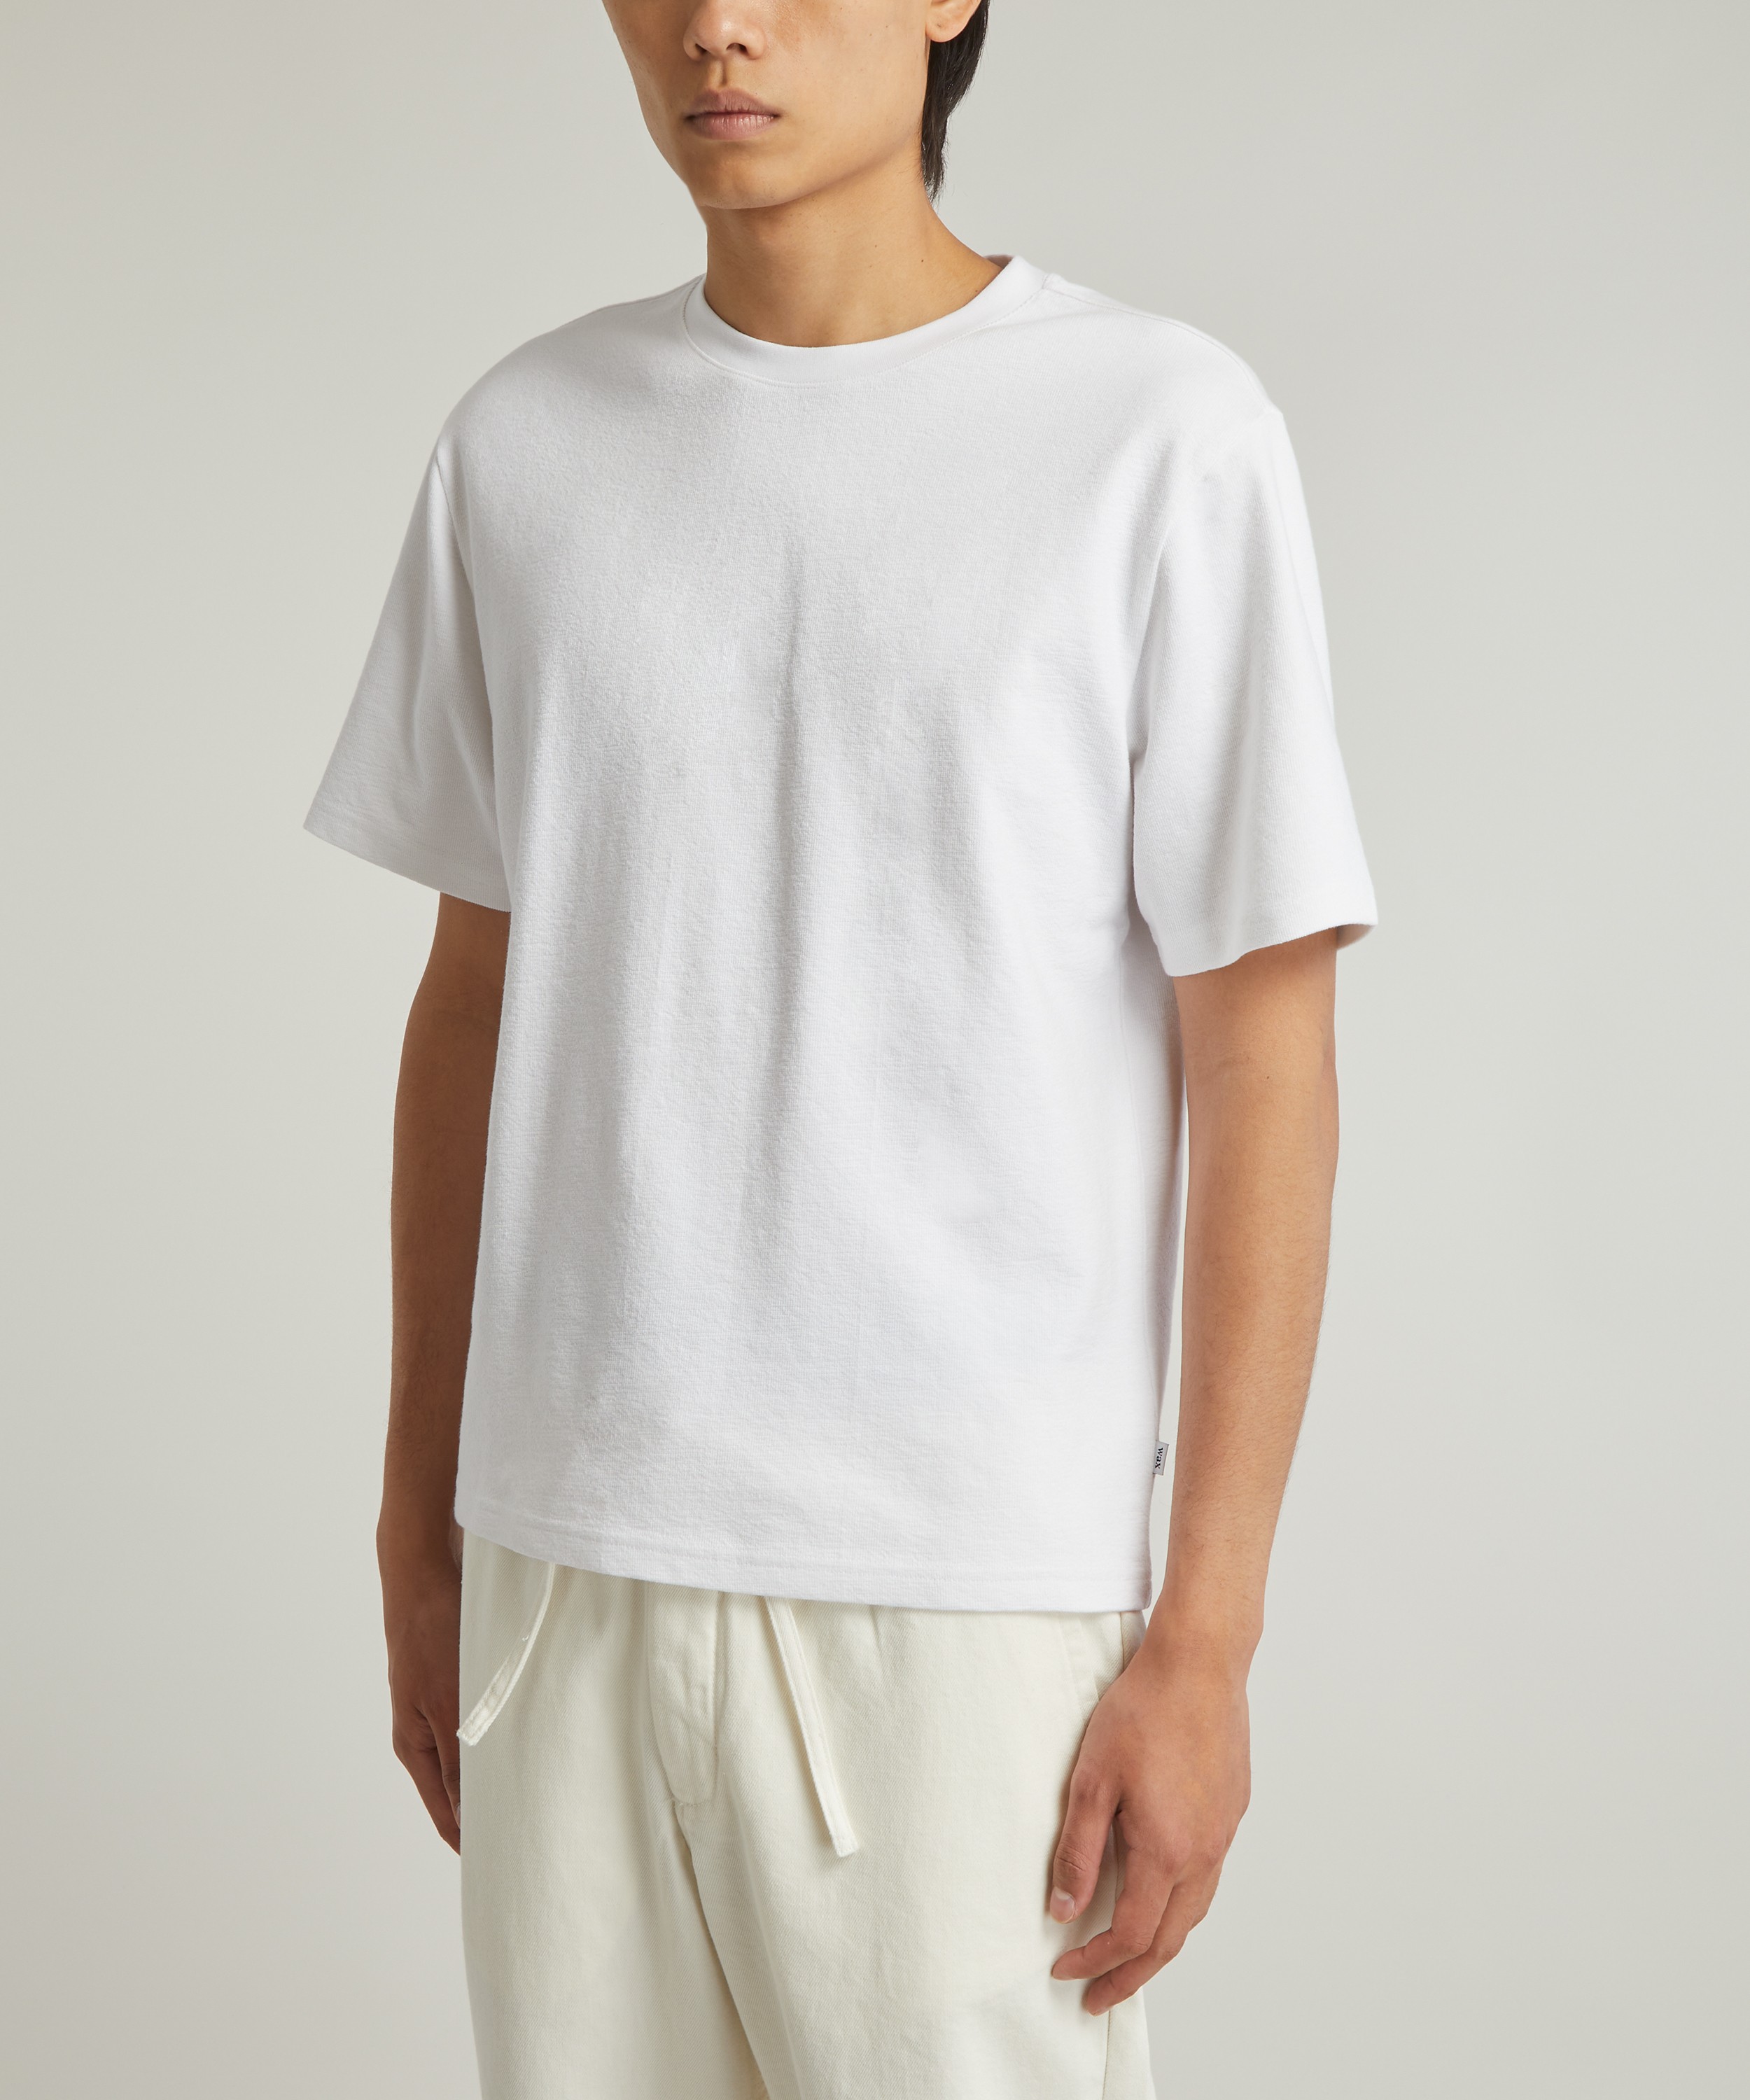 Wax London - Dean Textured Jolt White T-Shirt image number 2